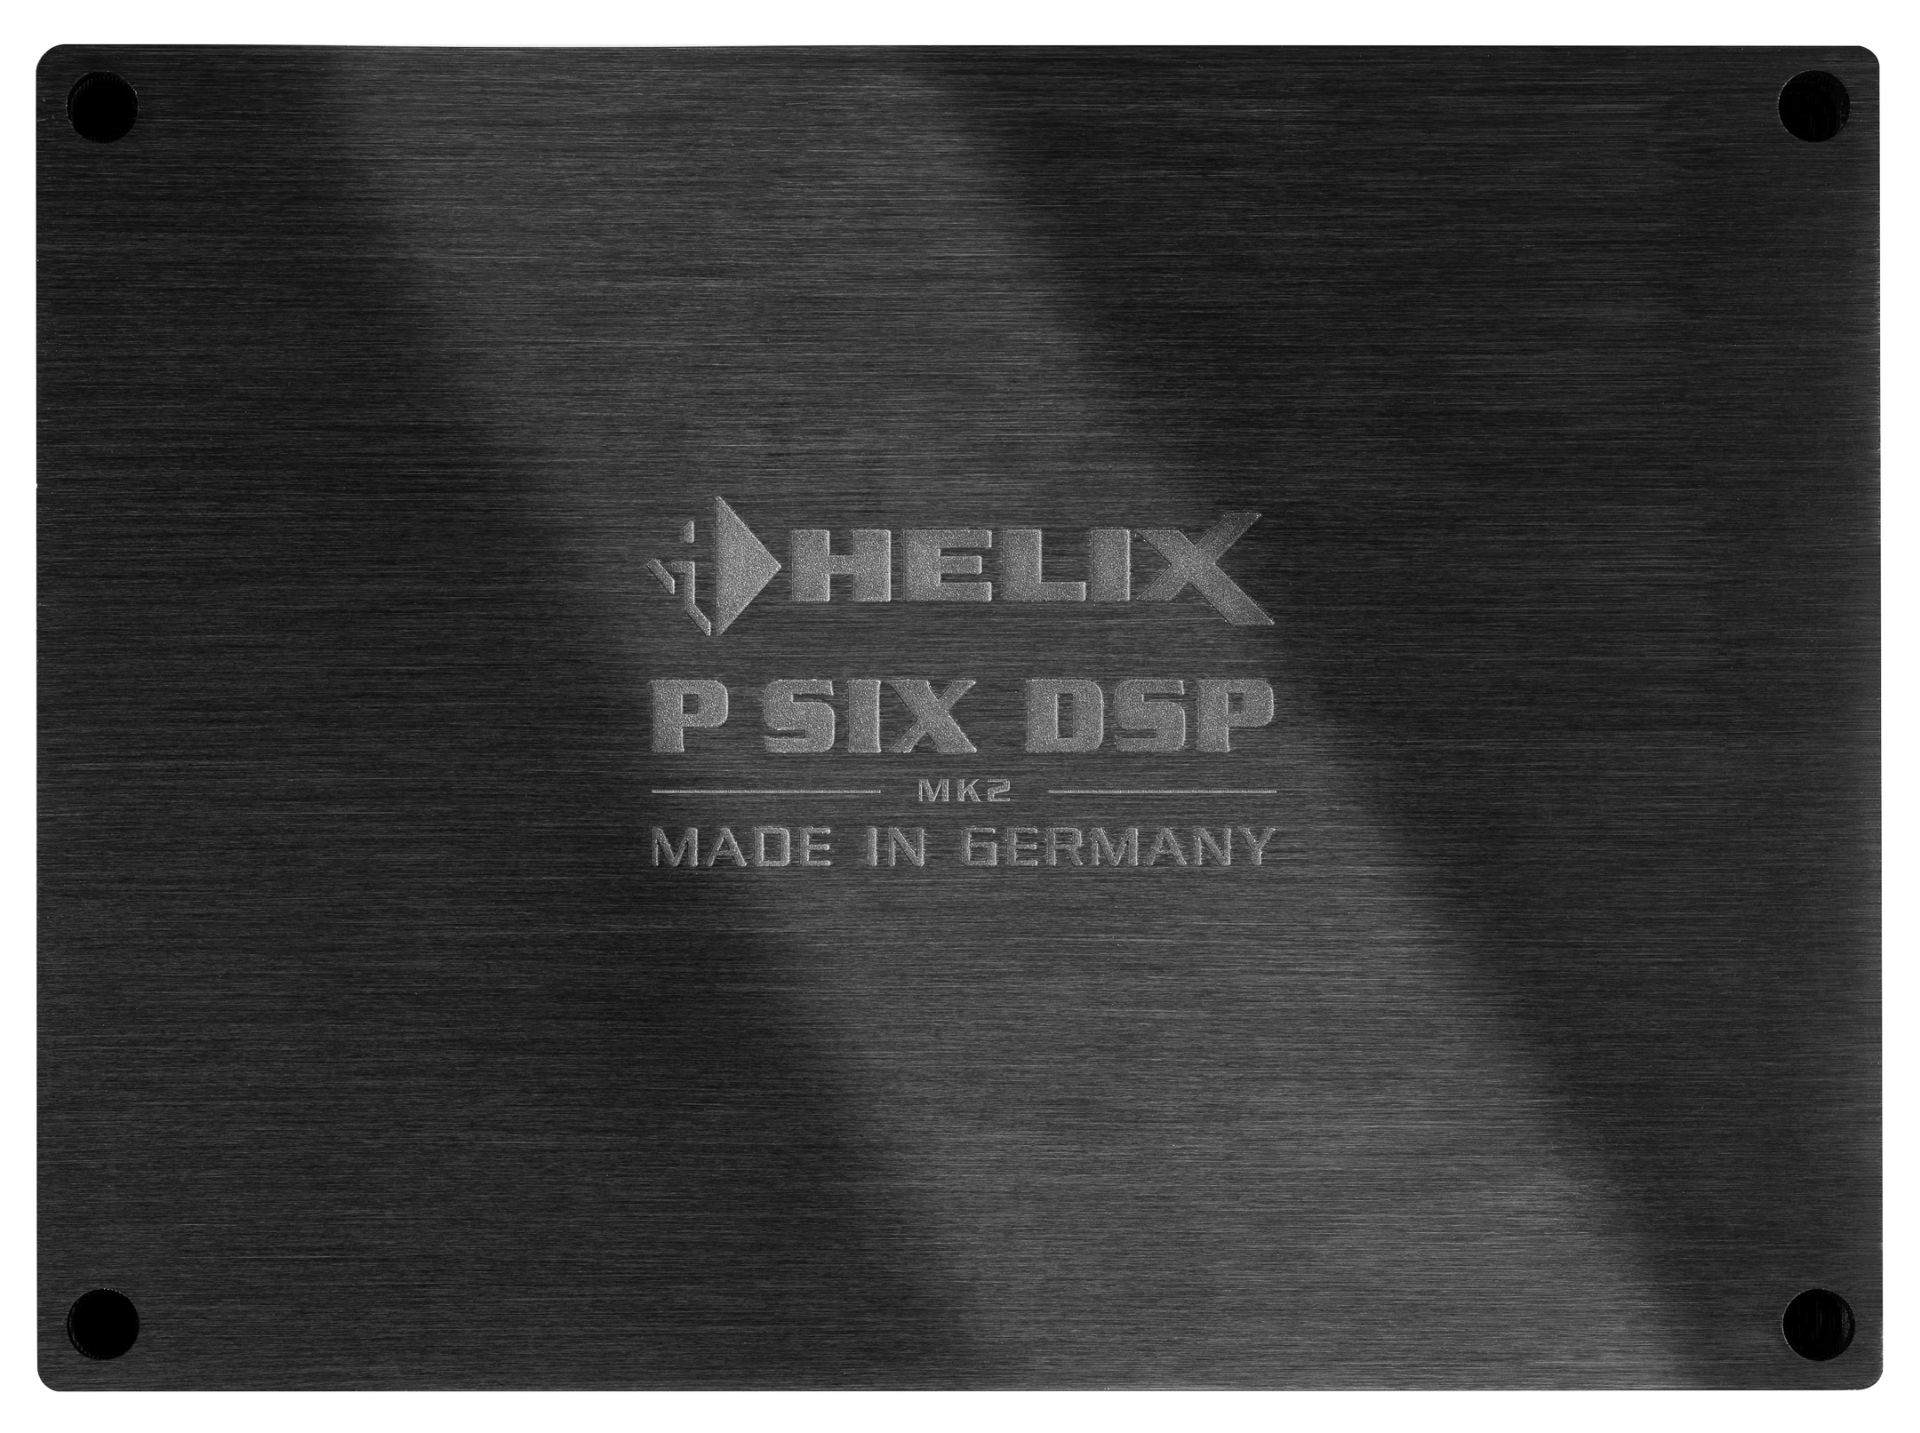 Zvočni procesor Helix P SIX DSP MK2